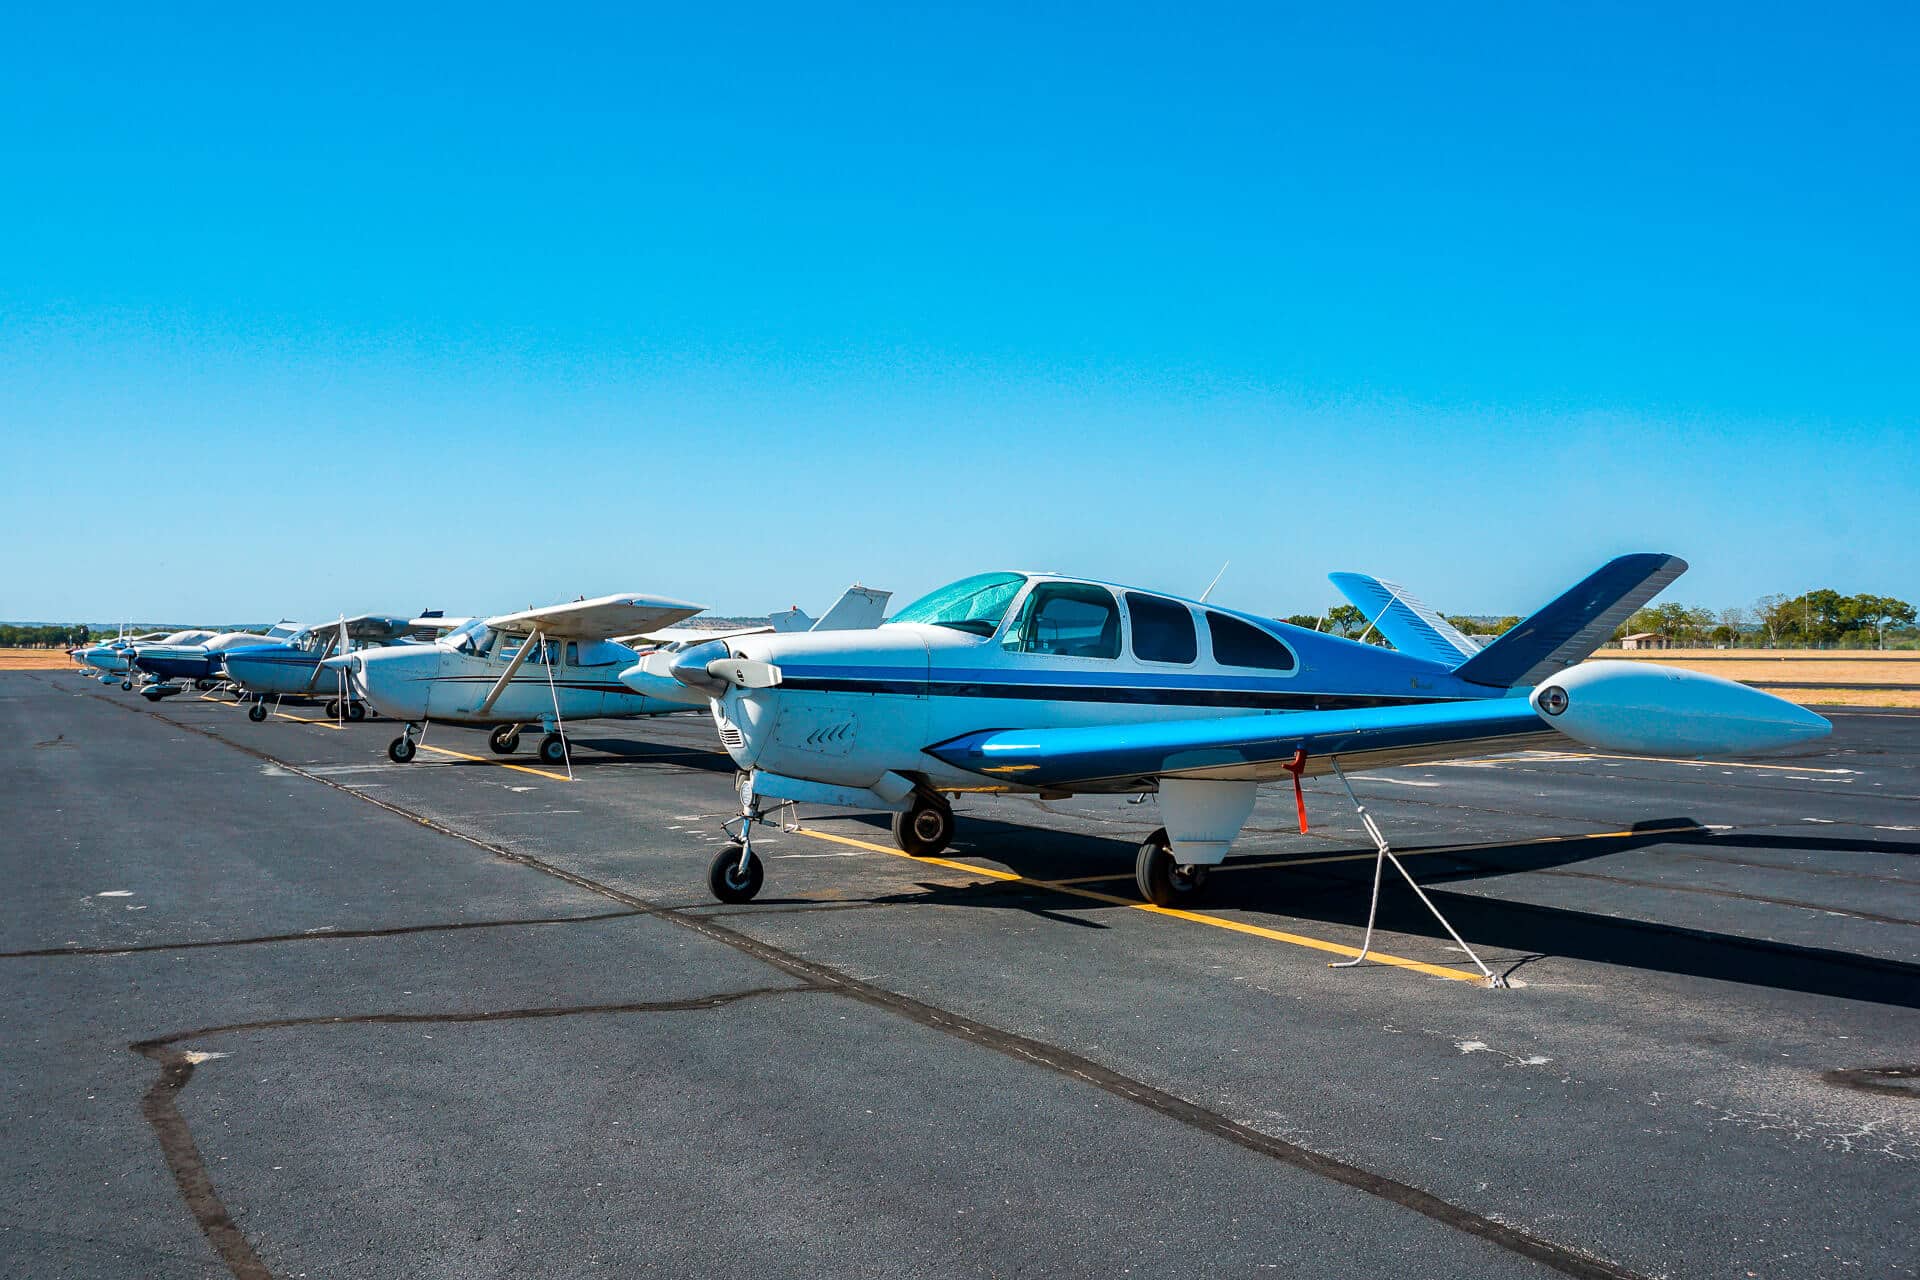 a line of personal aircrafts at the Fredericksburg runway